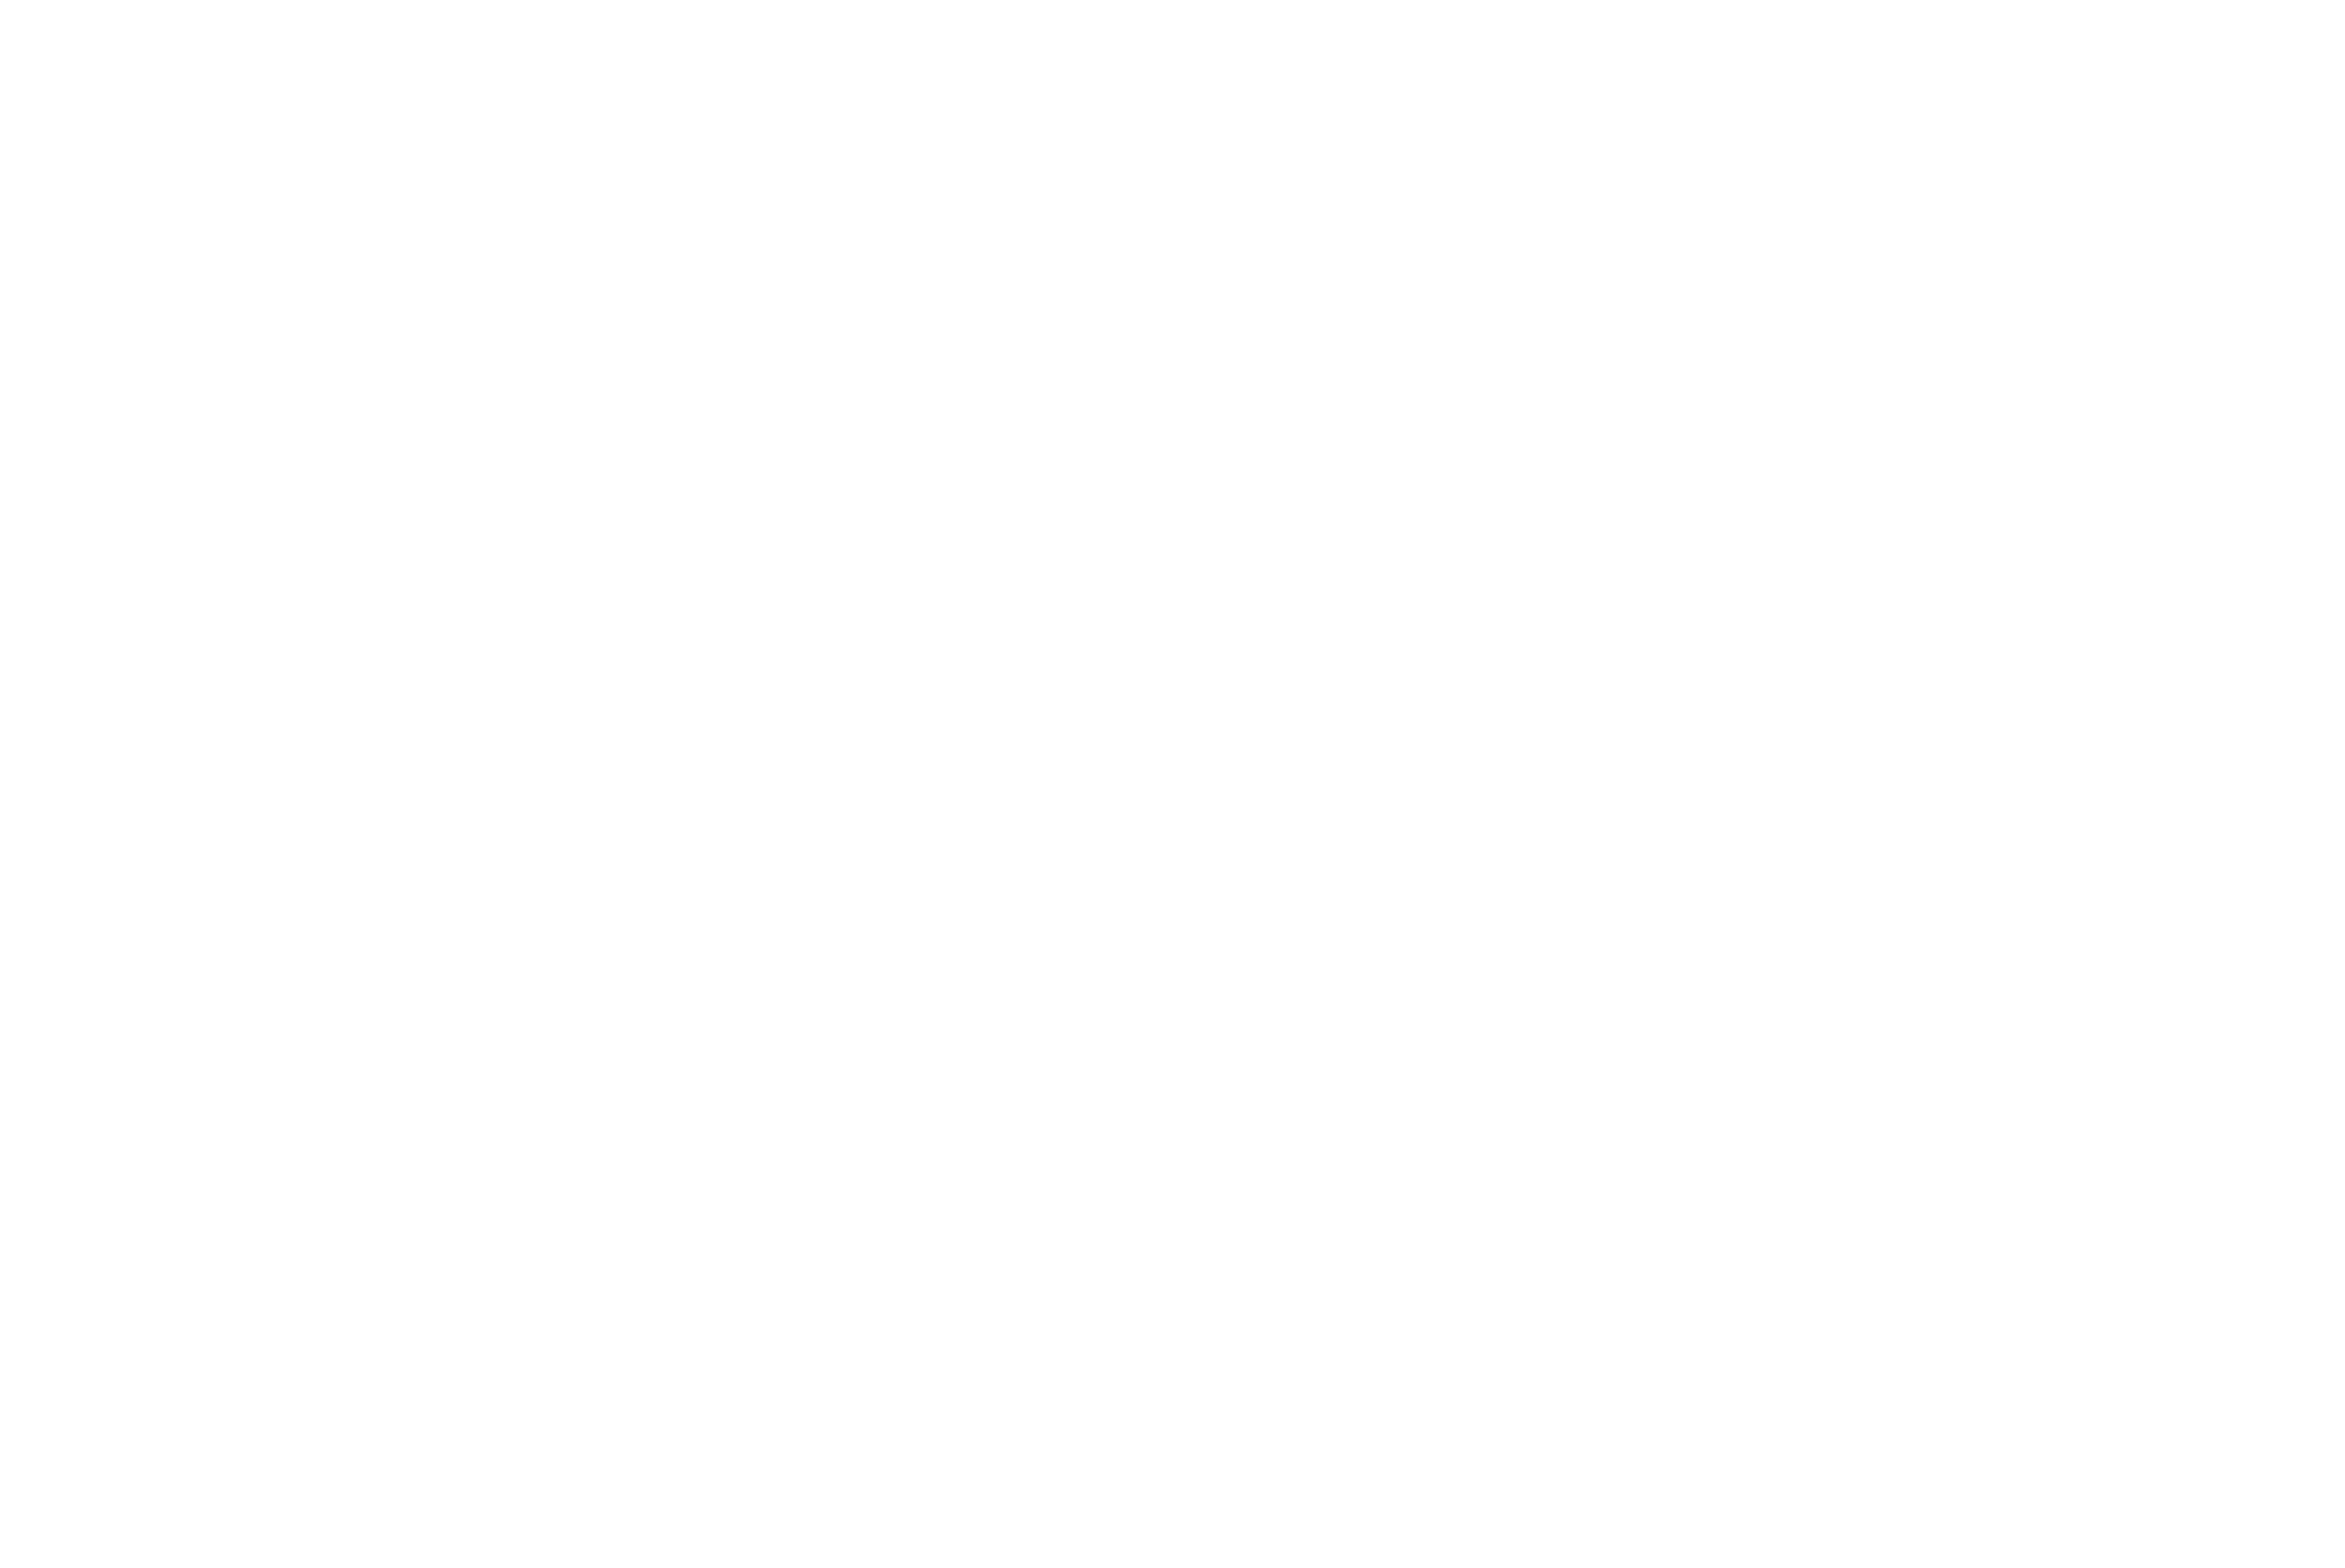 “Tech” Each one enhances technical skill and builds the best bond 一人一人が技術力を高め、最高の絆を築く